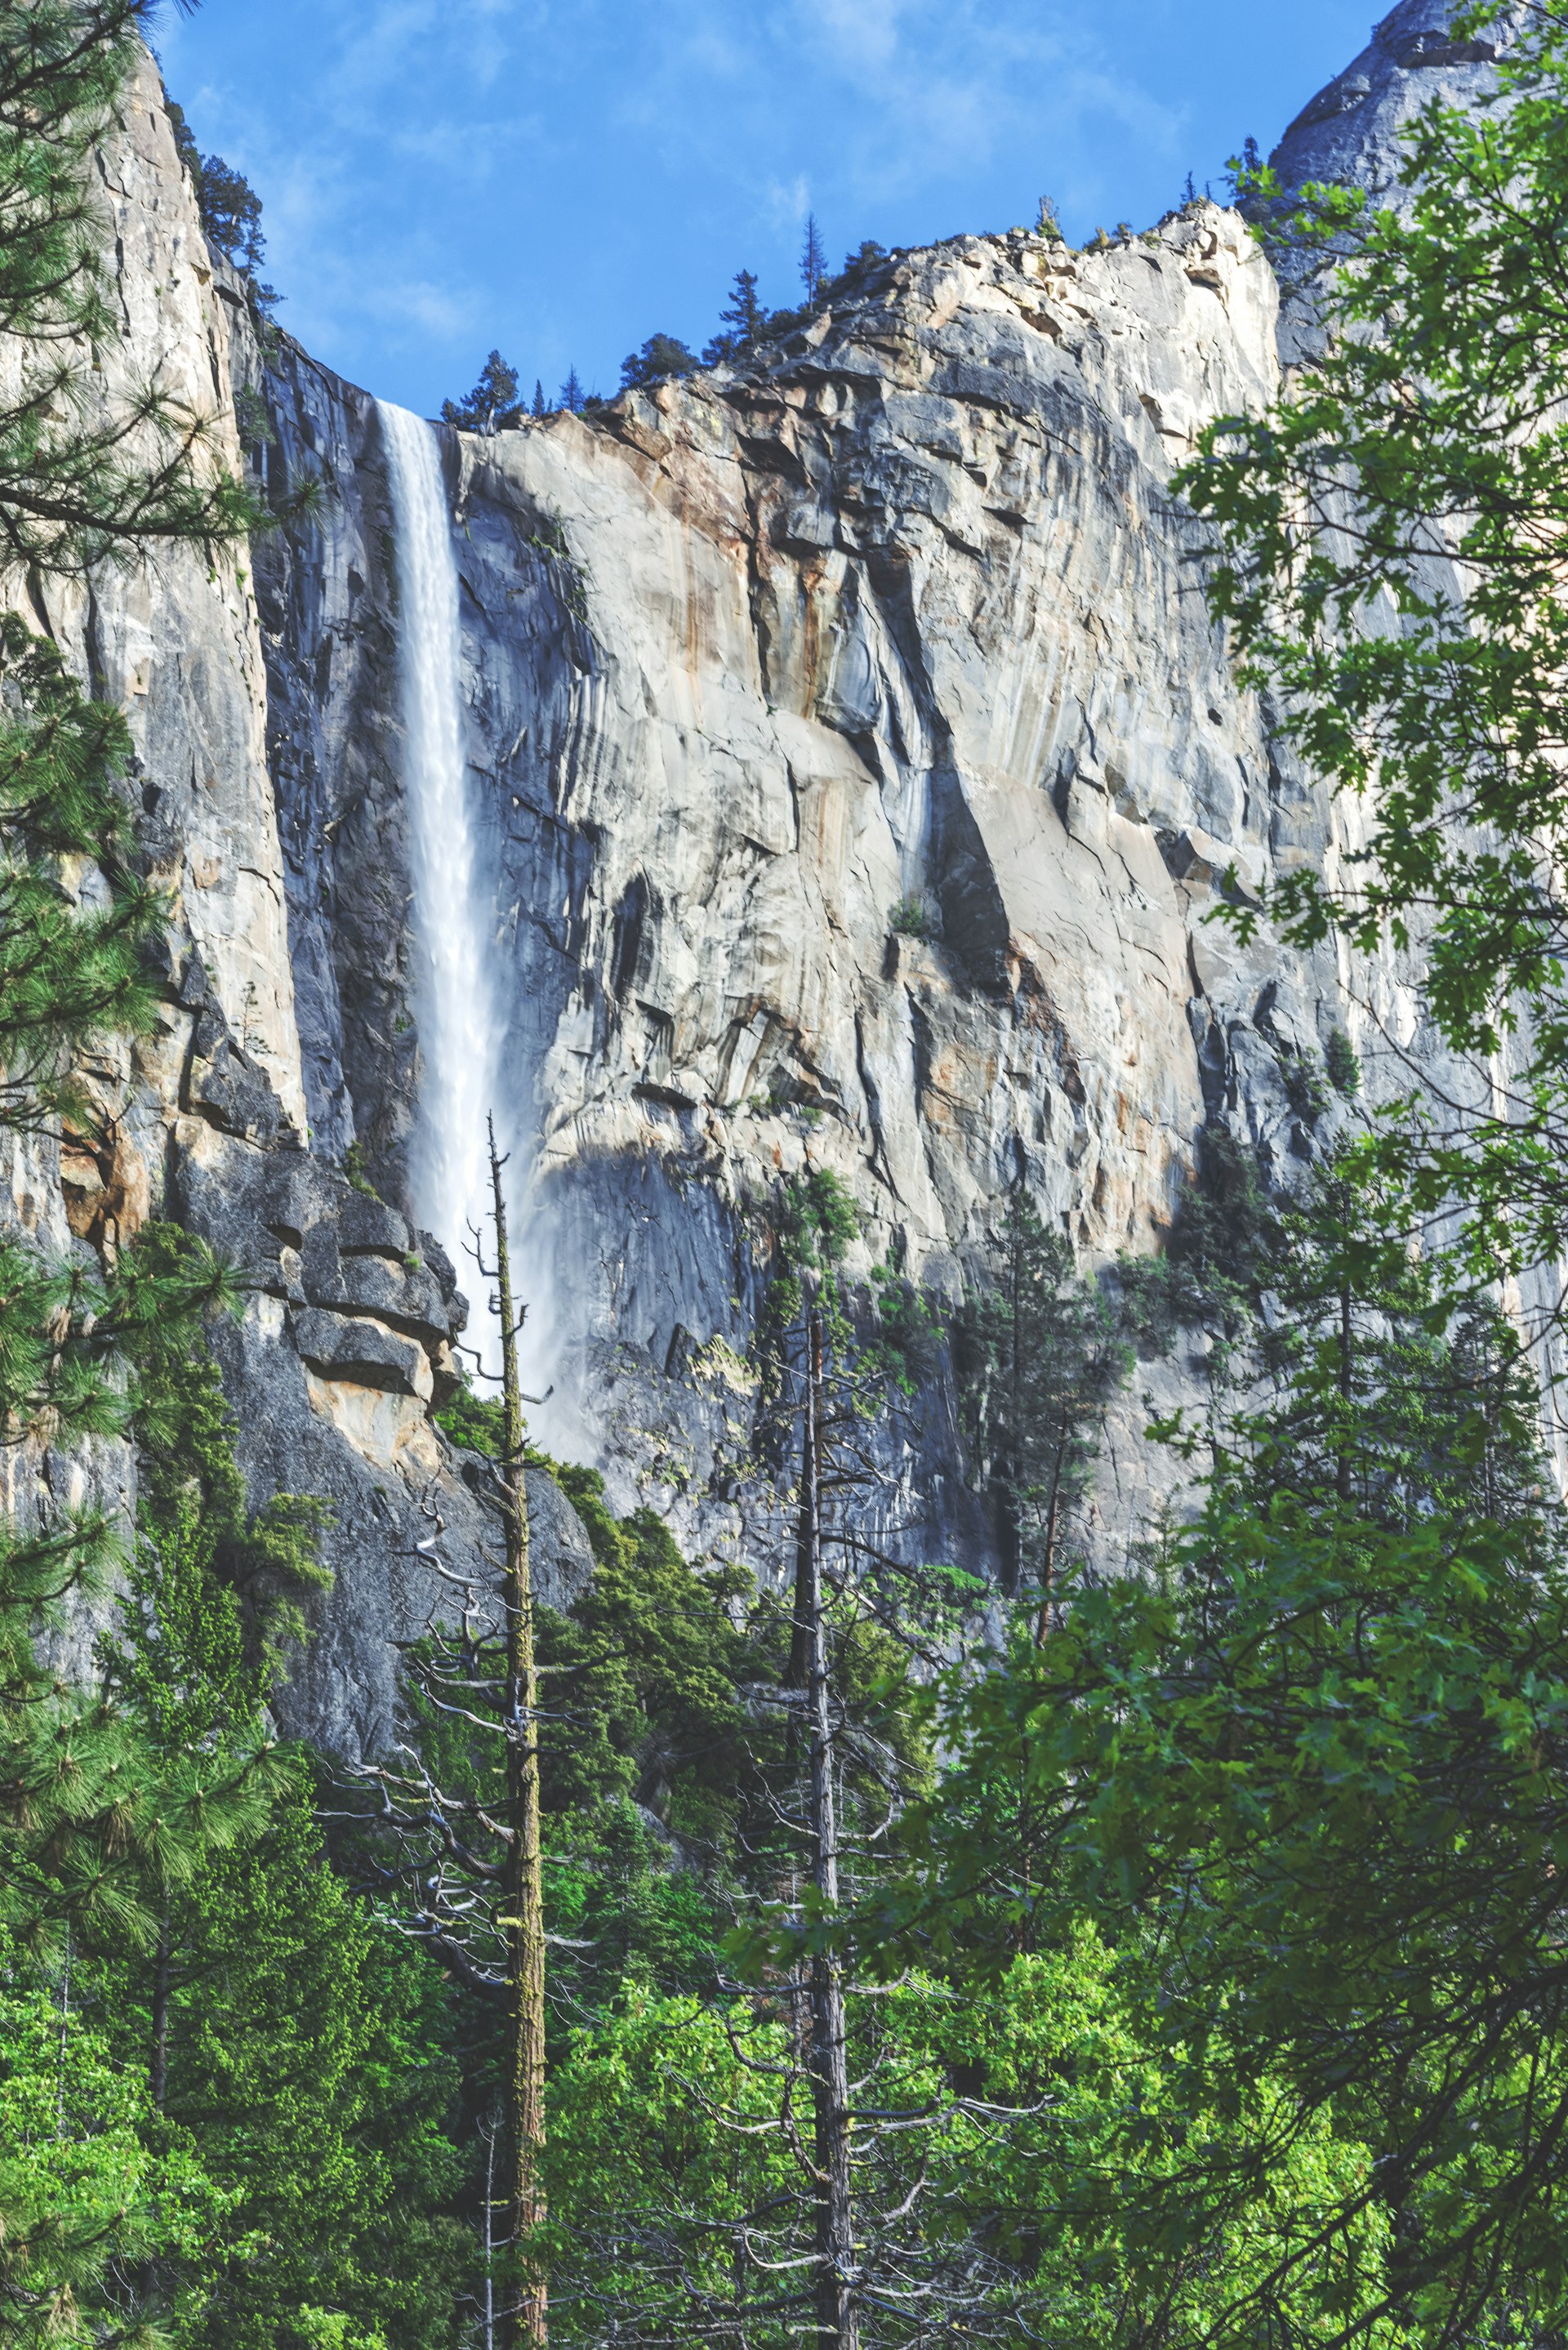 Ribbon Fall in Yosemite National Park, California